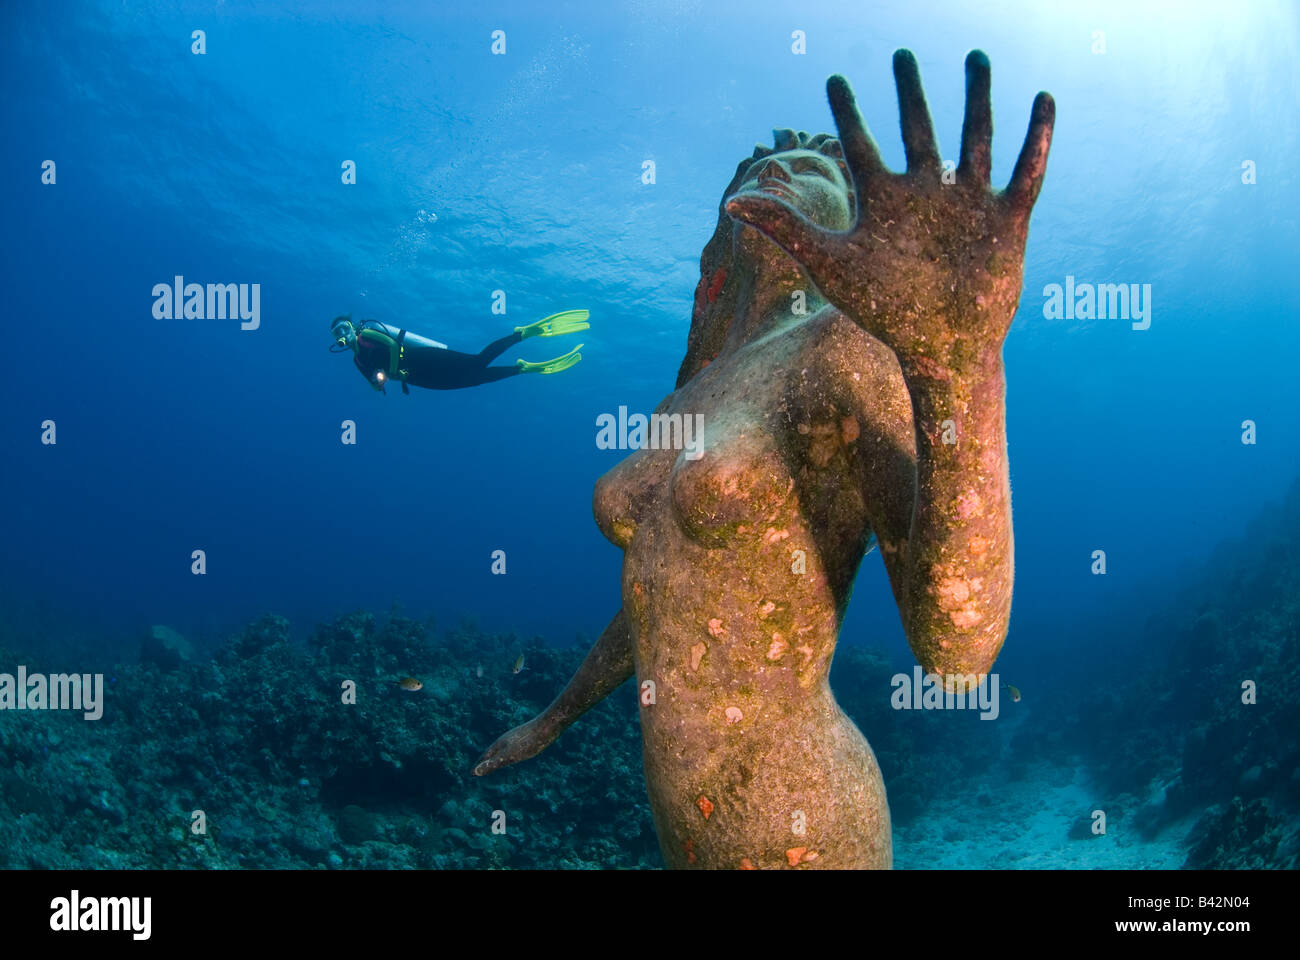 Meerjungfrau-Skulptur und Taucher Grand Cayman Karibik-Cayman-Inseln Stockfoto